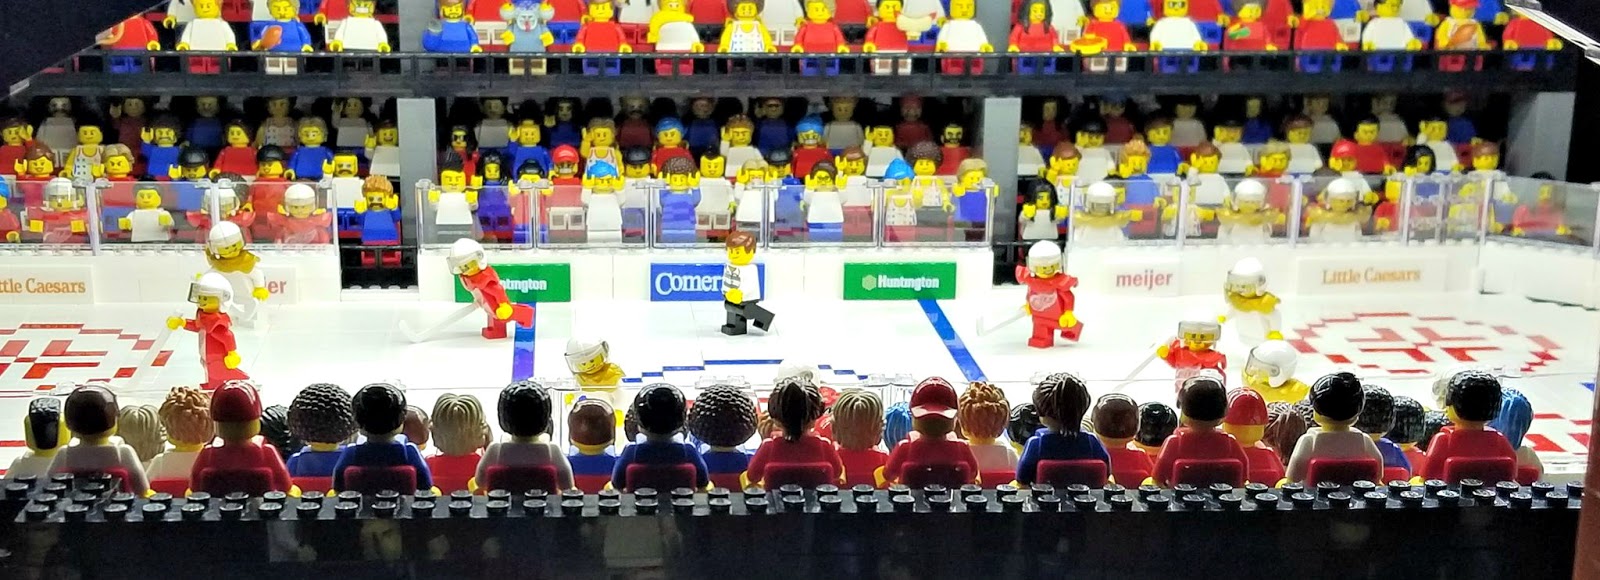 LEGO model of Little Caesars Arena unveiled